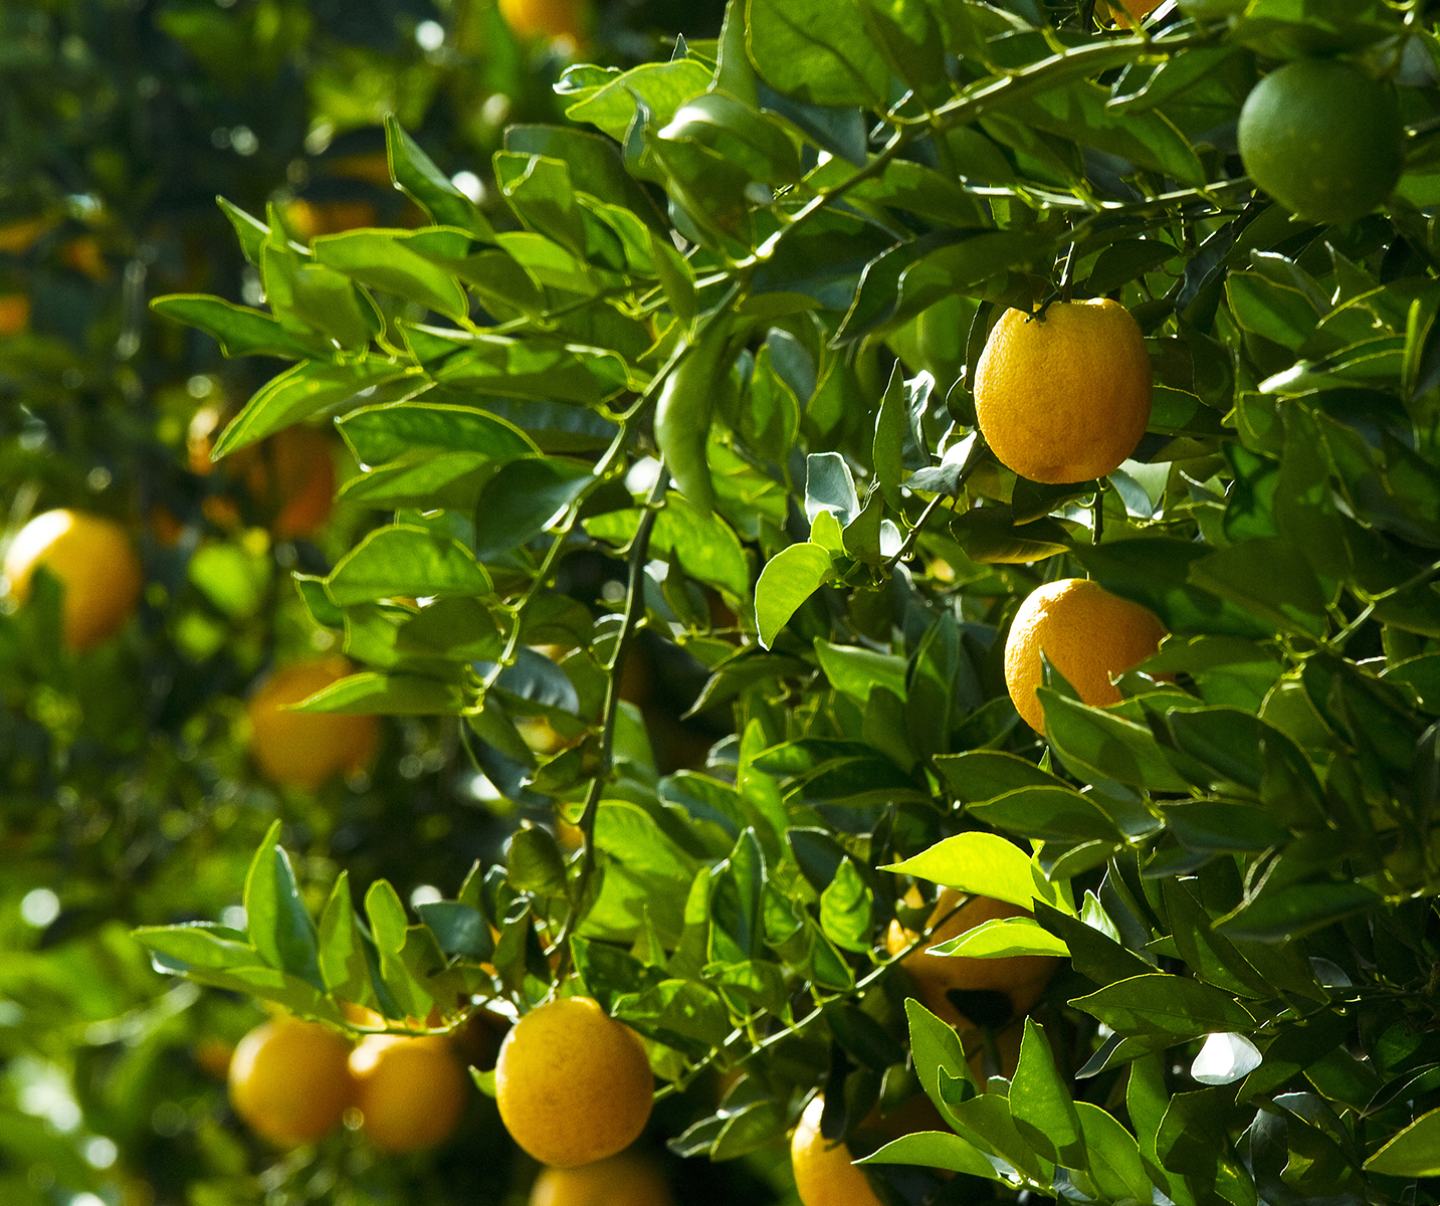 Citrus plant with fruits